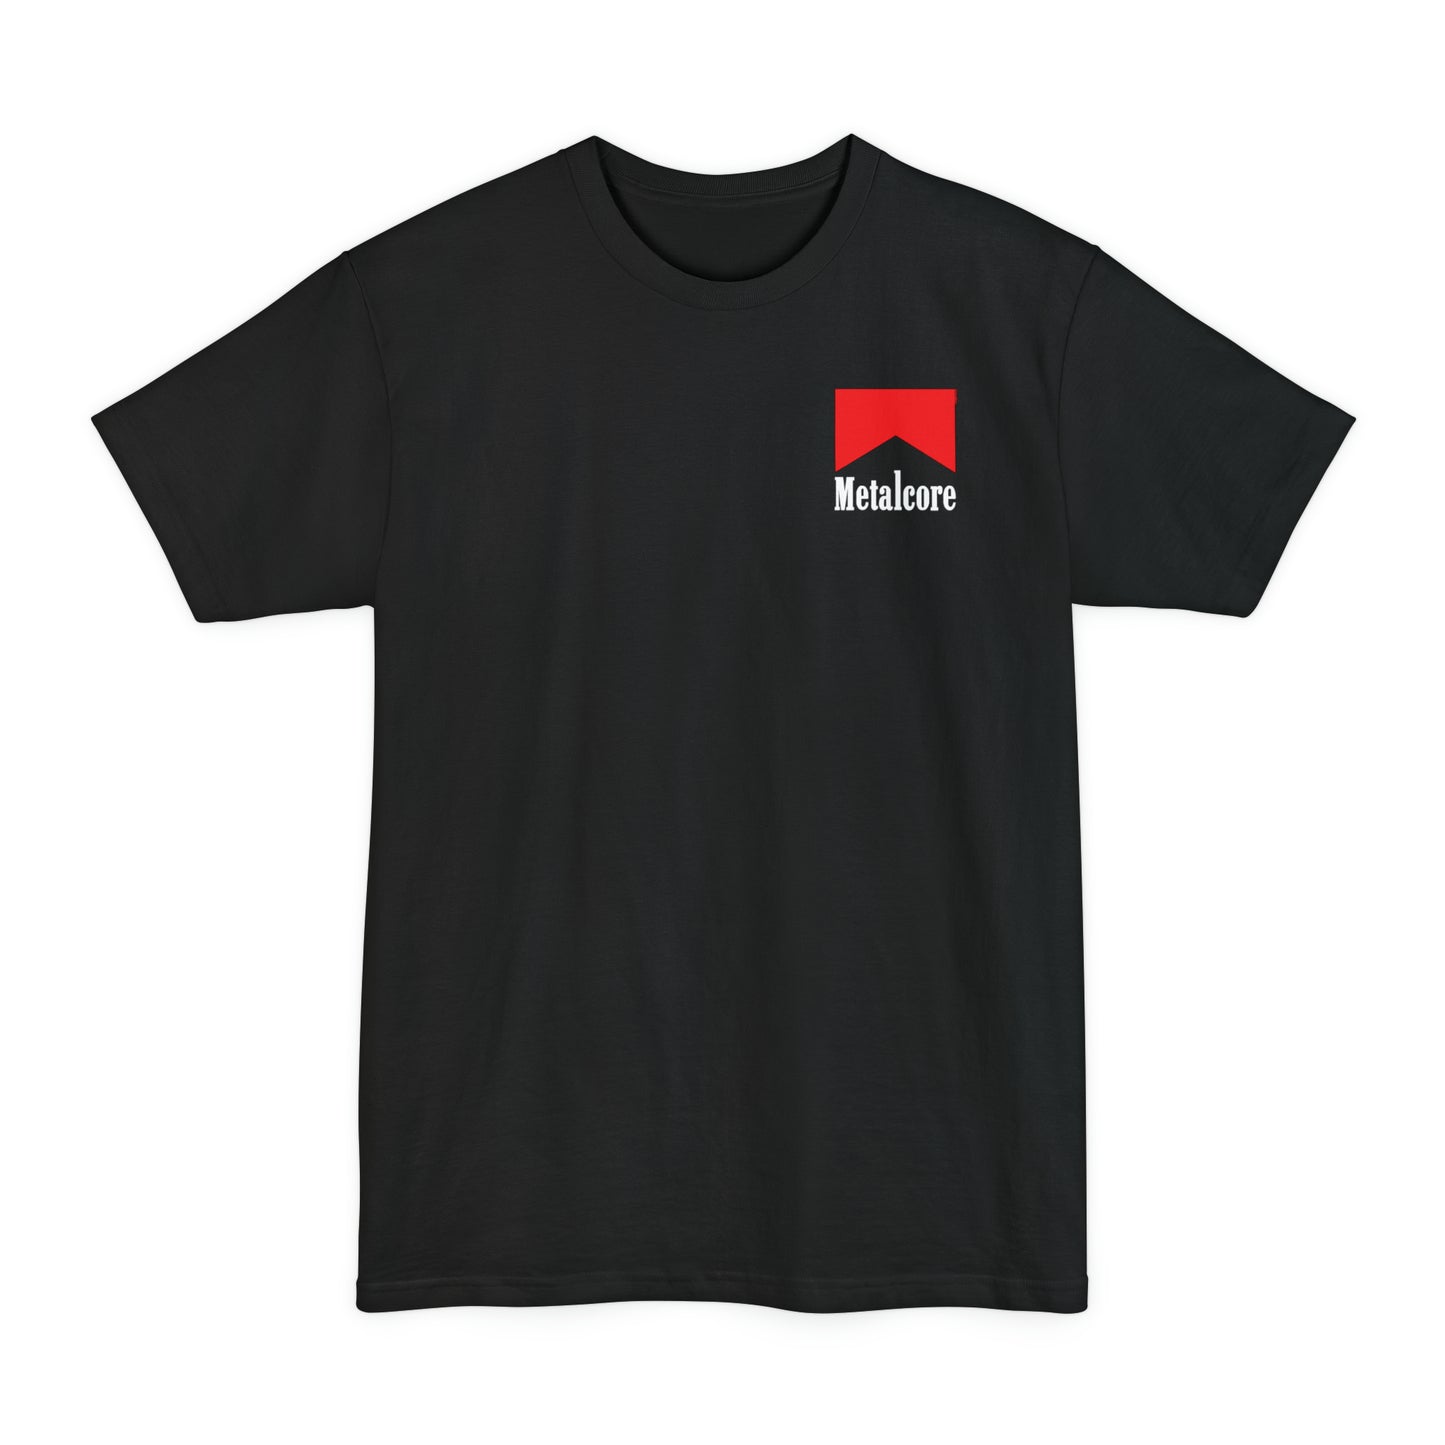 Metalcore "marlboro" T-shirt BIG & TALL